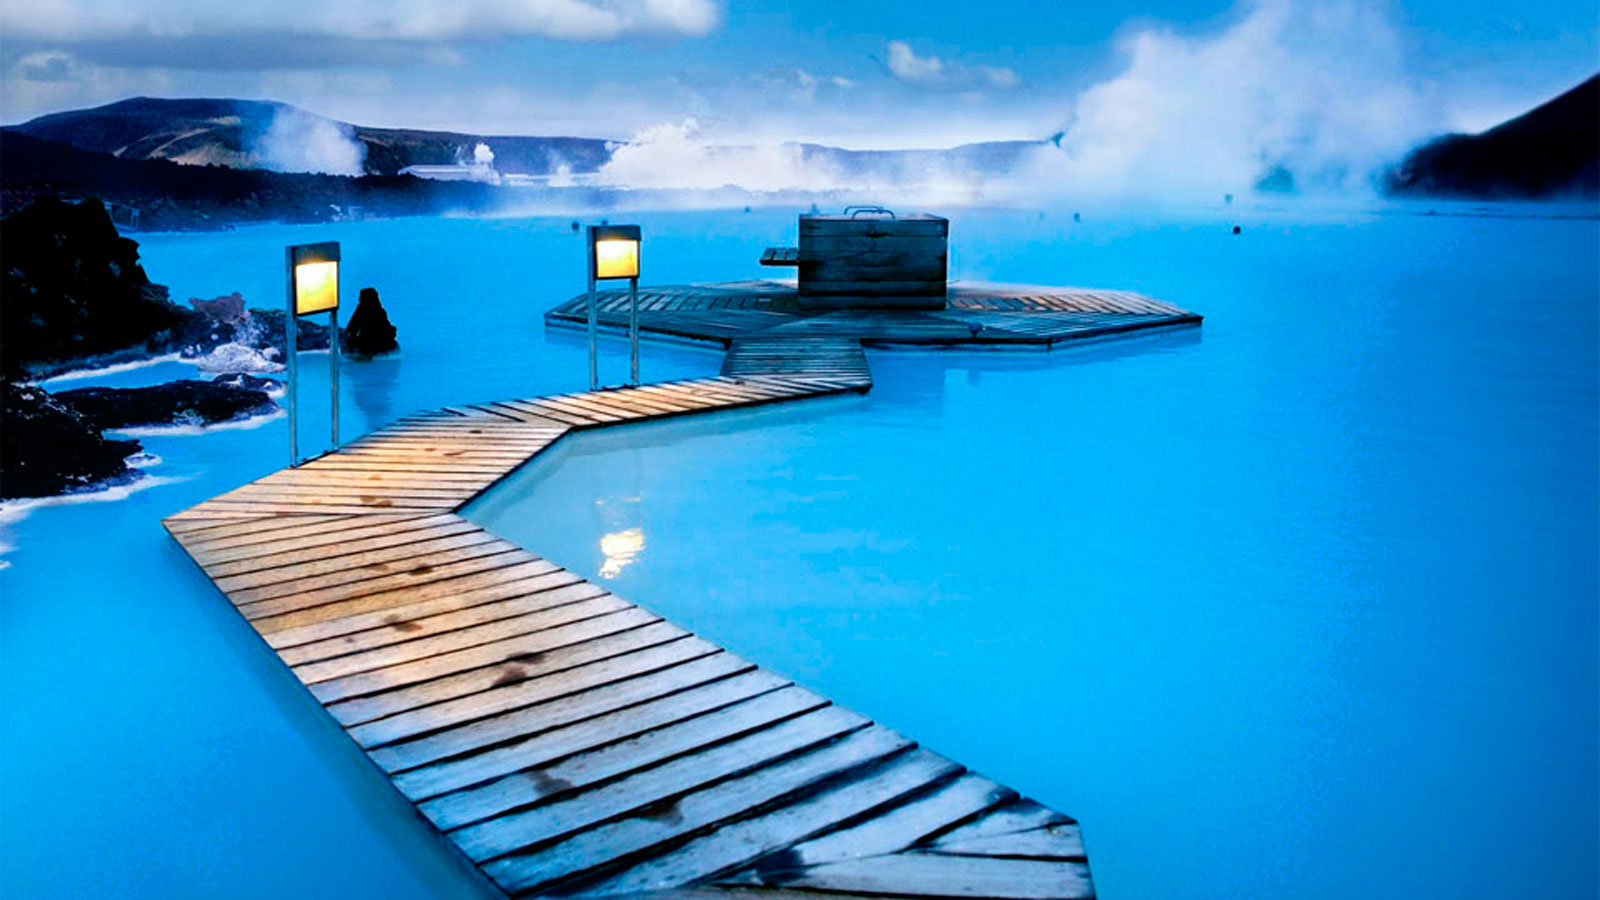 blue-lagoon-iceland-holidays-blue-lagoon-iceland-blue-lagoon-iceland-massage-blue-lagoon-iceland-hotels-iceland-airport-to-blue-lagoon-to-hotel-iceland-blue-lagoon-and-northern-lights-package.jpg